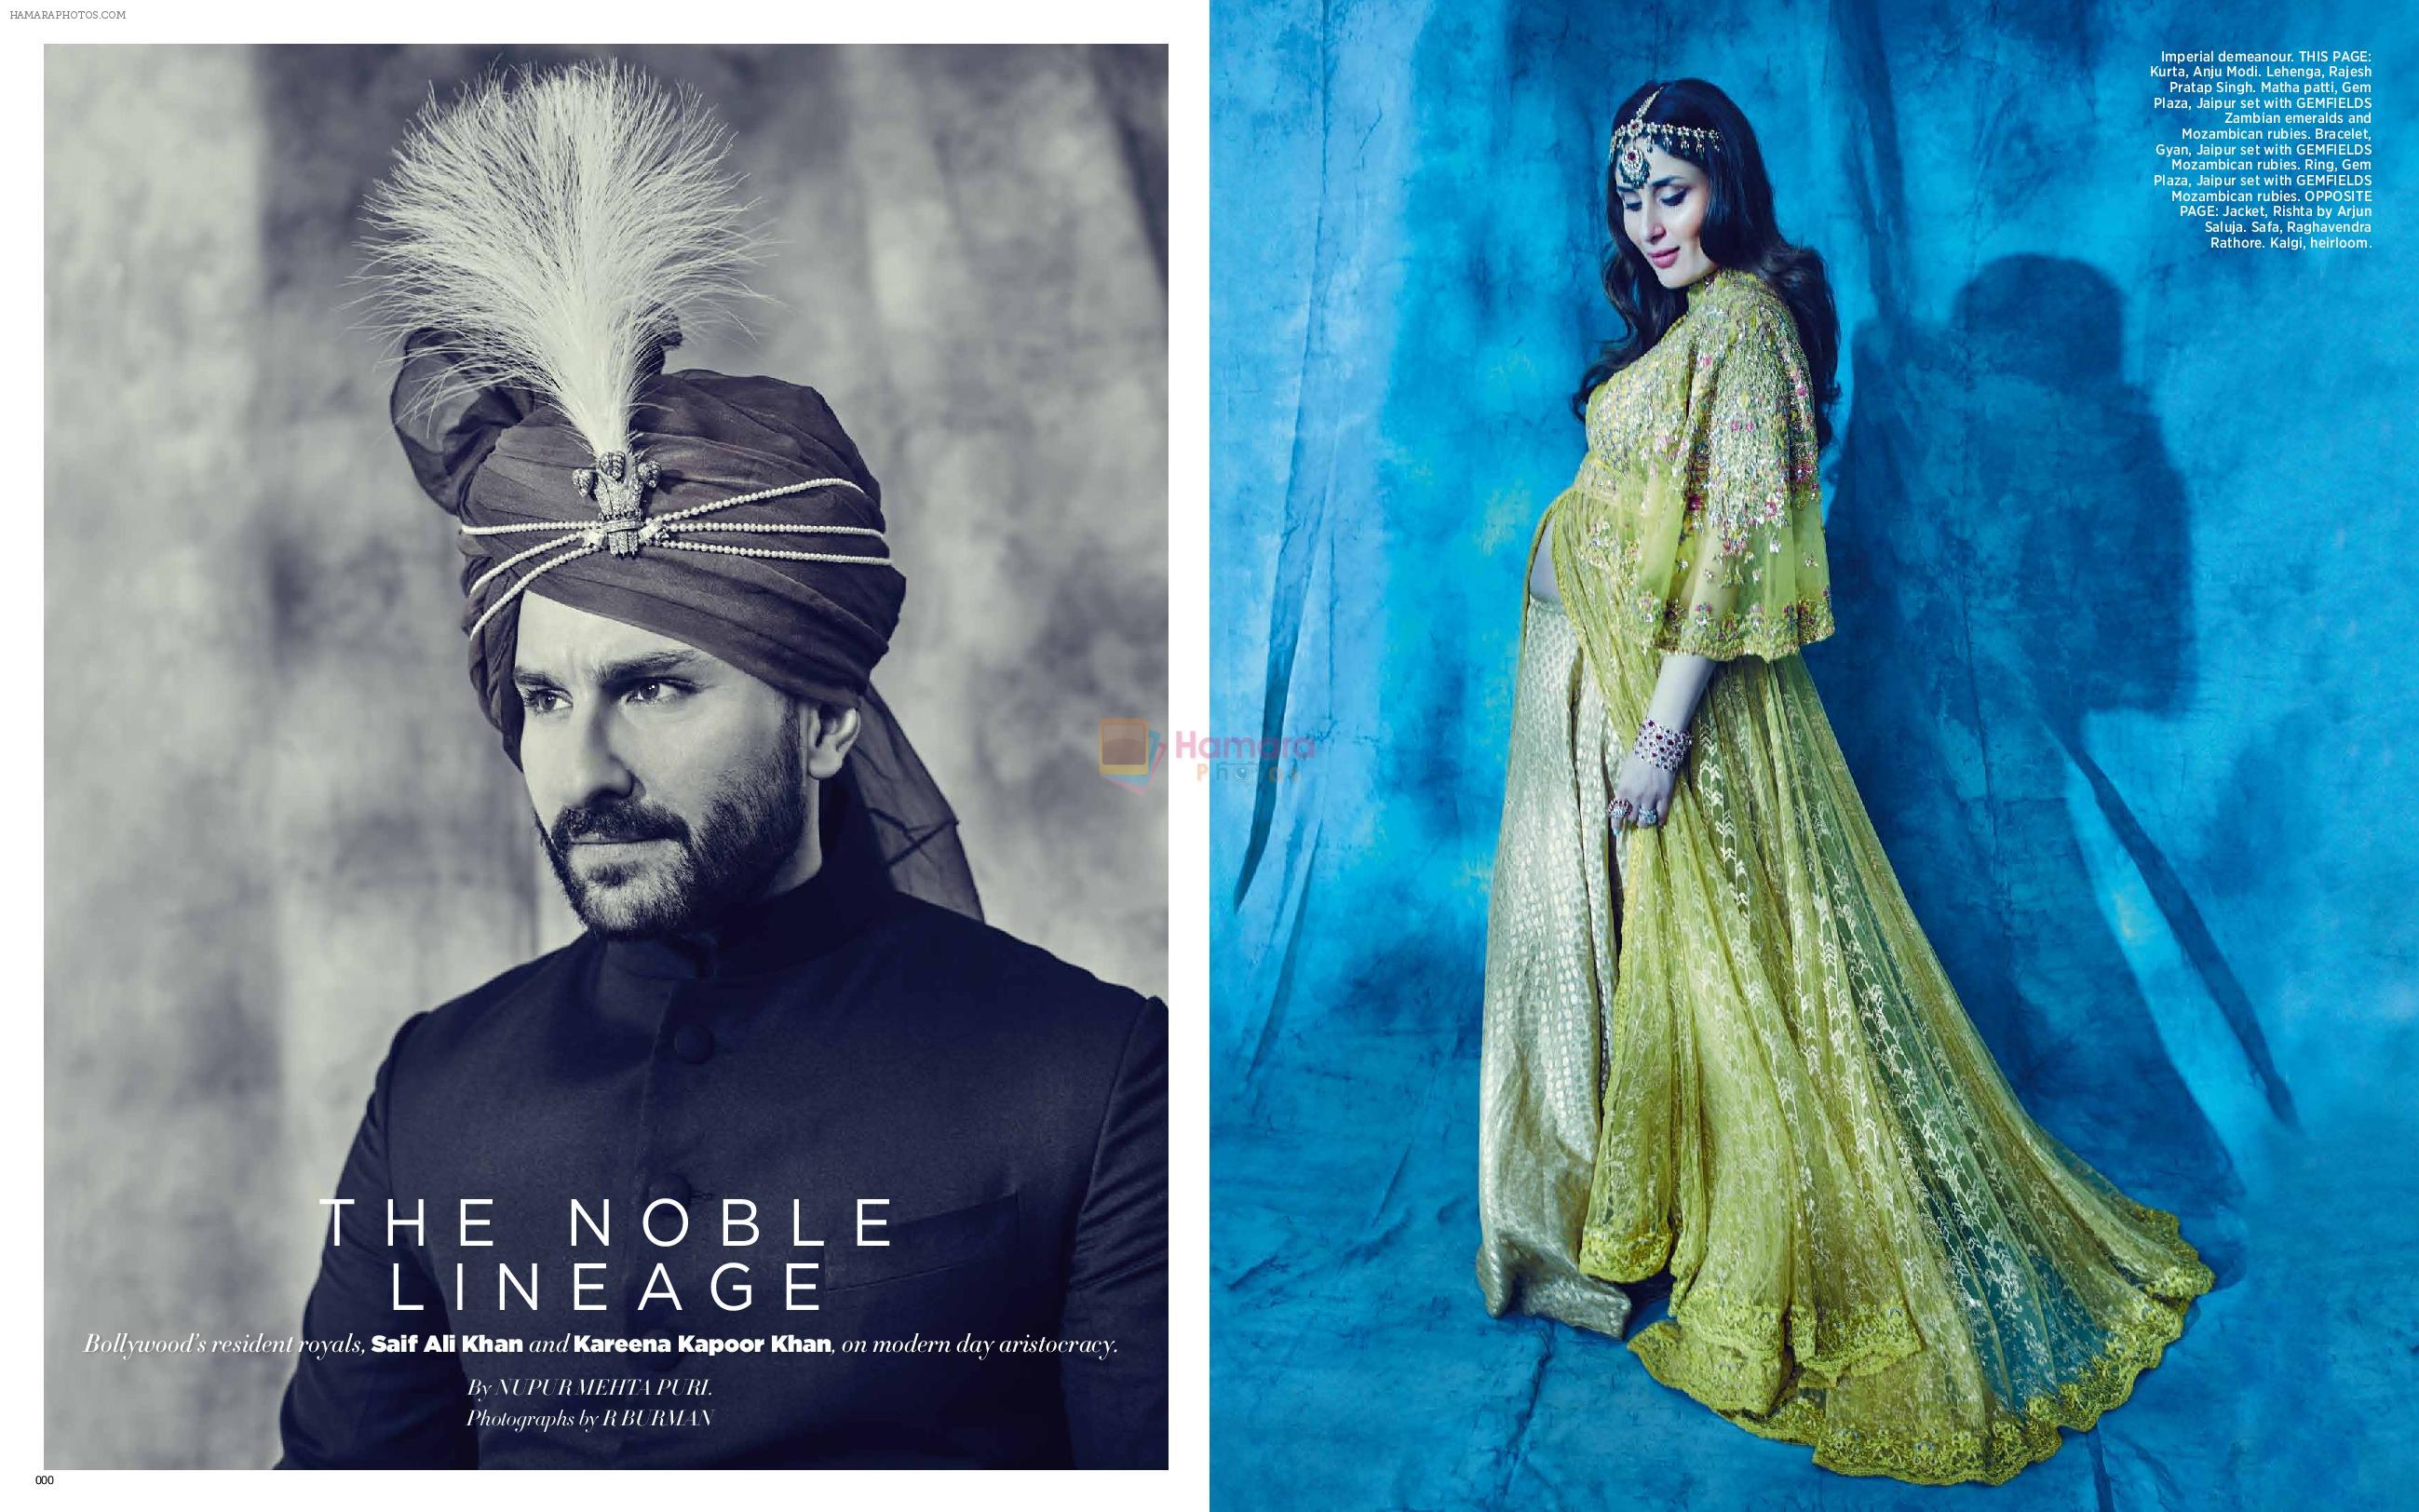 Saif Ali Khan and Kareena Kapoor on the cover of Harper's Bazaar Bride, November issue